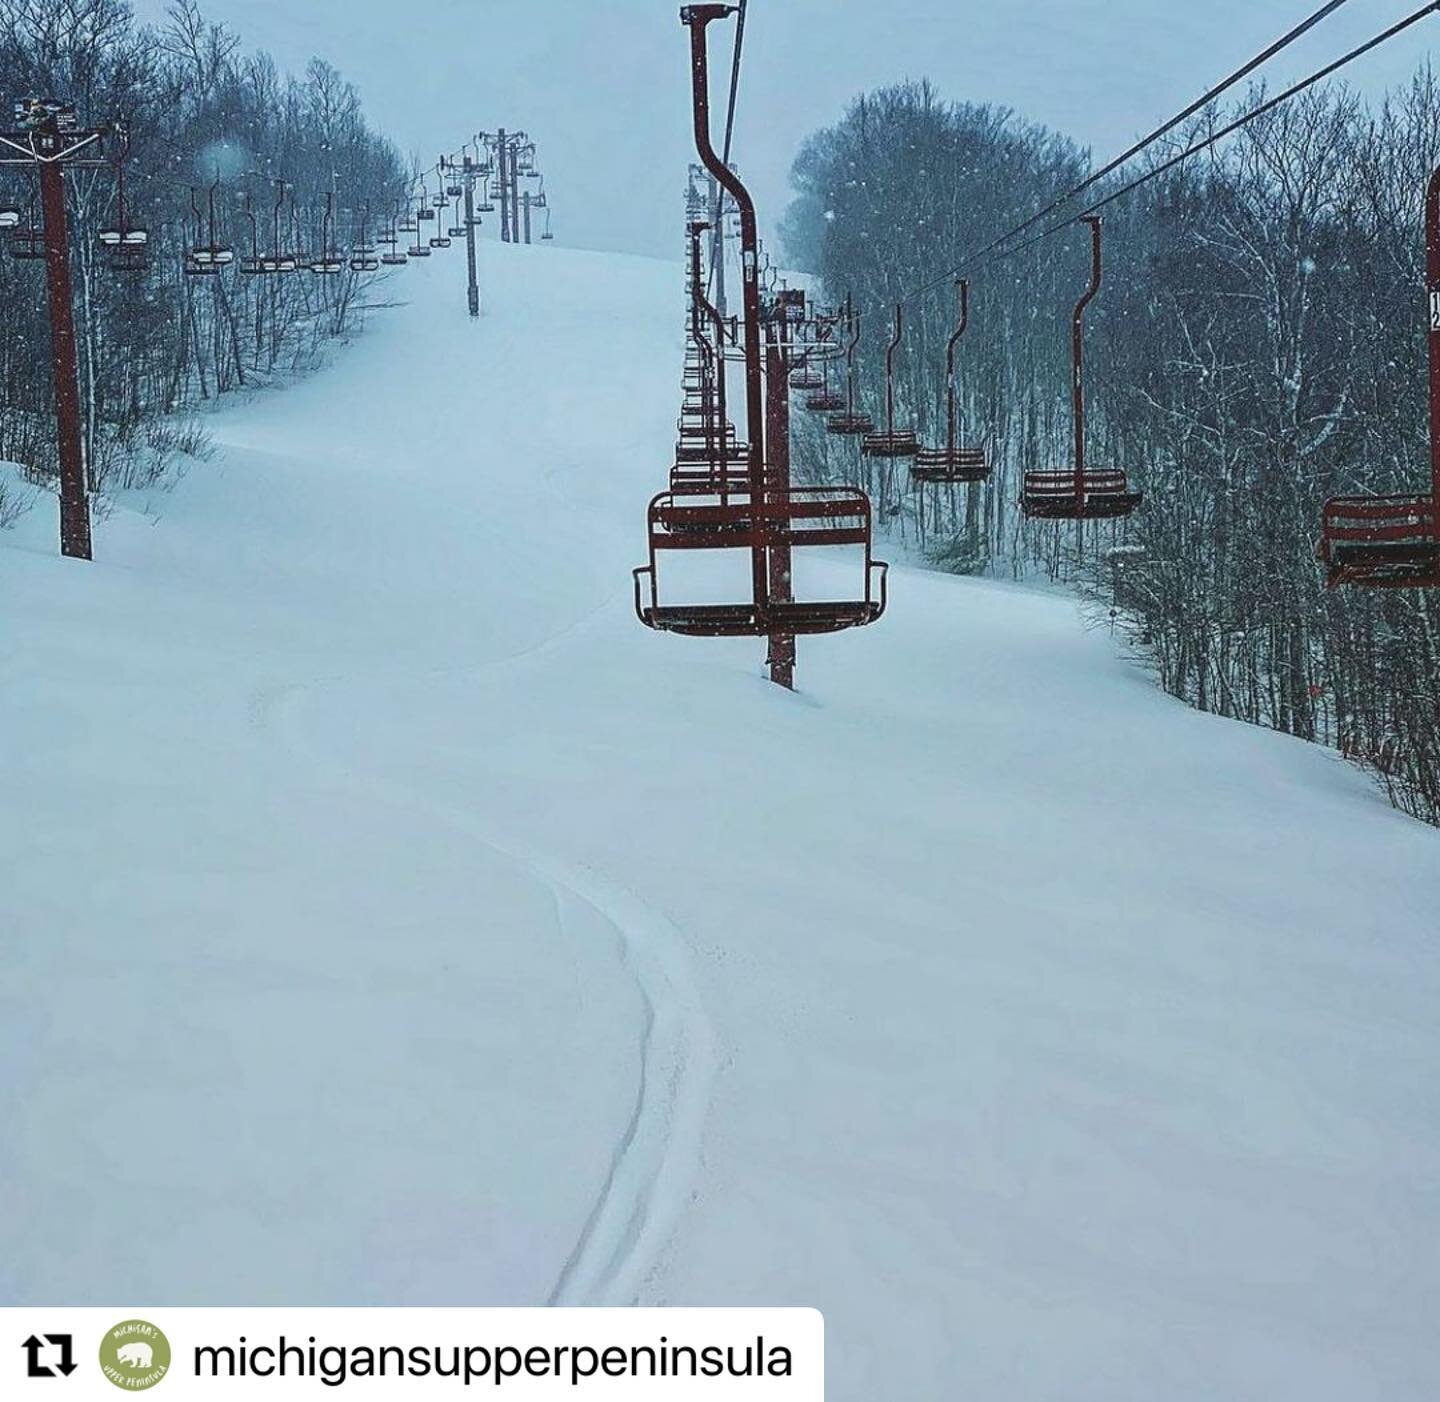 Ski Capital of the Midwest. ❄️⛷ @bigpowderhornmtn 🏔 
📸: @swingindranch 
#michigansupperpeninsula #upperpeninsula #upperpeninsulamichigan #uppermichigan #yooper #greatlakes #greatlakesstate #lakesuperior #truenorth #ski #winter #puremichigan #explor